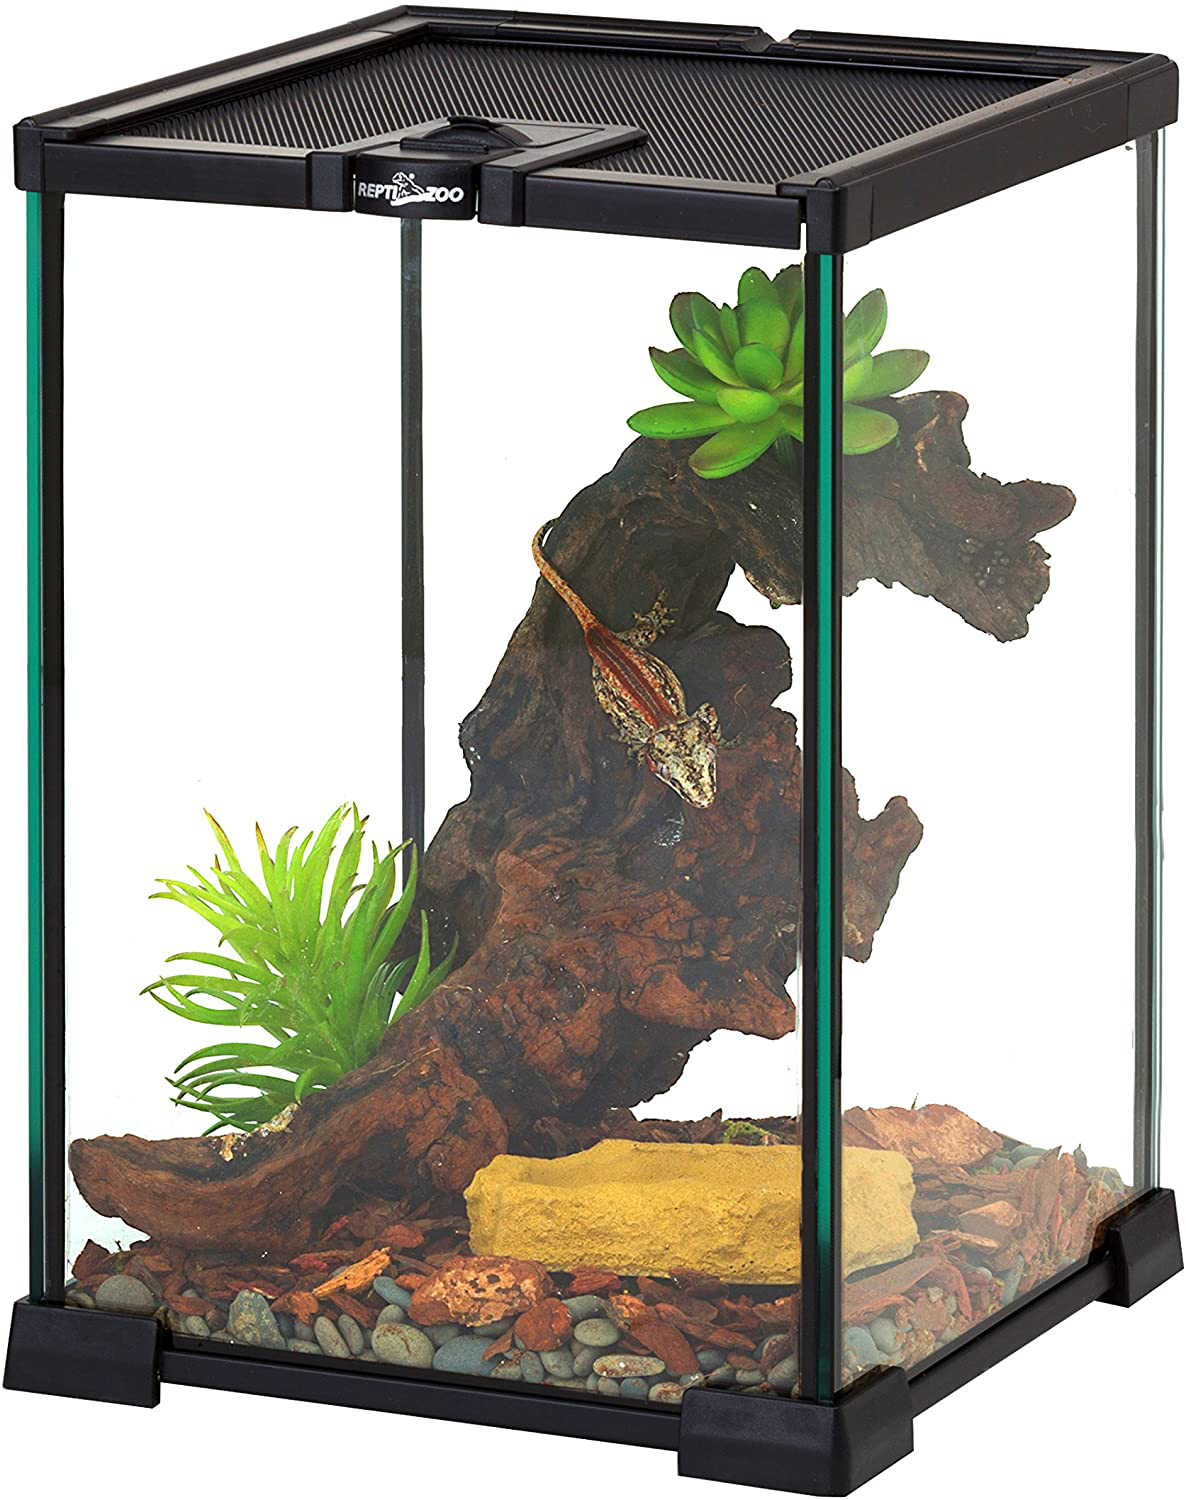 REPTIZOO Mini Reptile Glass Terrarium Tank 8" X 8" X 12" Full View Visually Appealing Top Feeding & Venlitation Small Reptile Glass Habitat